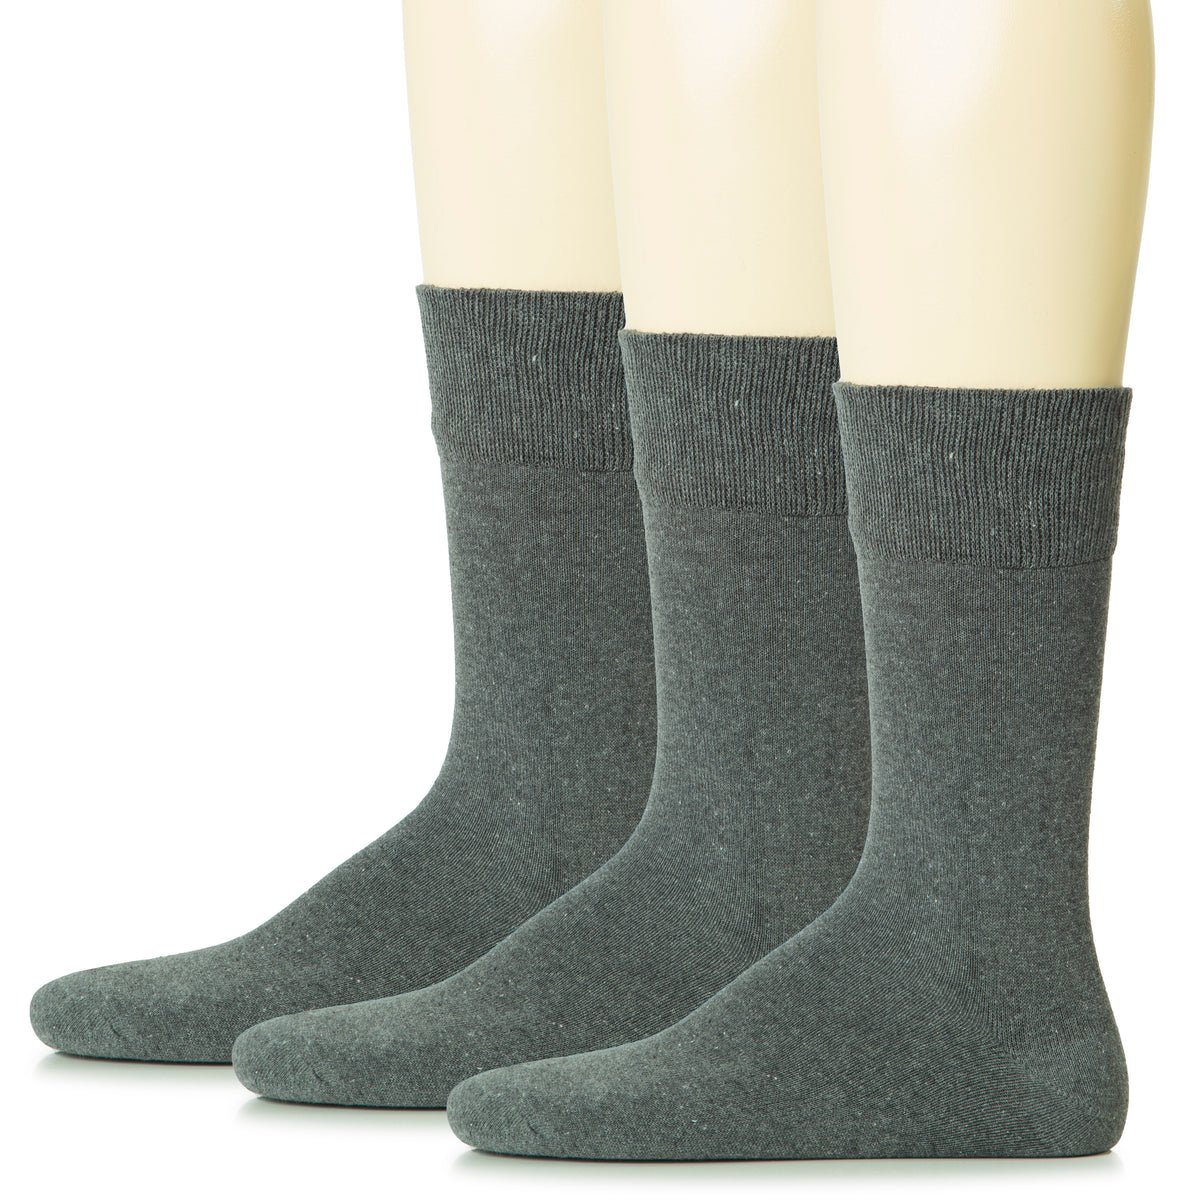 Hugh Ugoli Men Cotton Dress Socks XL / L / M / S Sizes, 3 Pairs | Shoe Size: 6-8 | Dark Gray